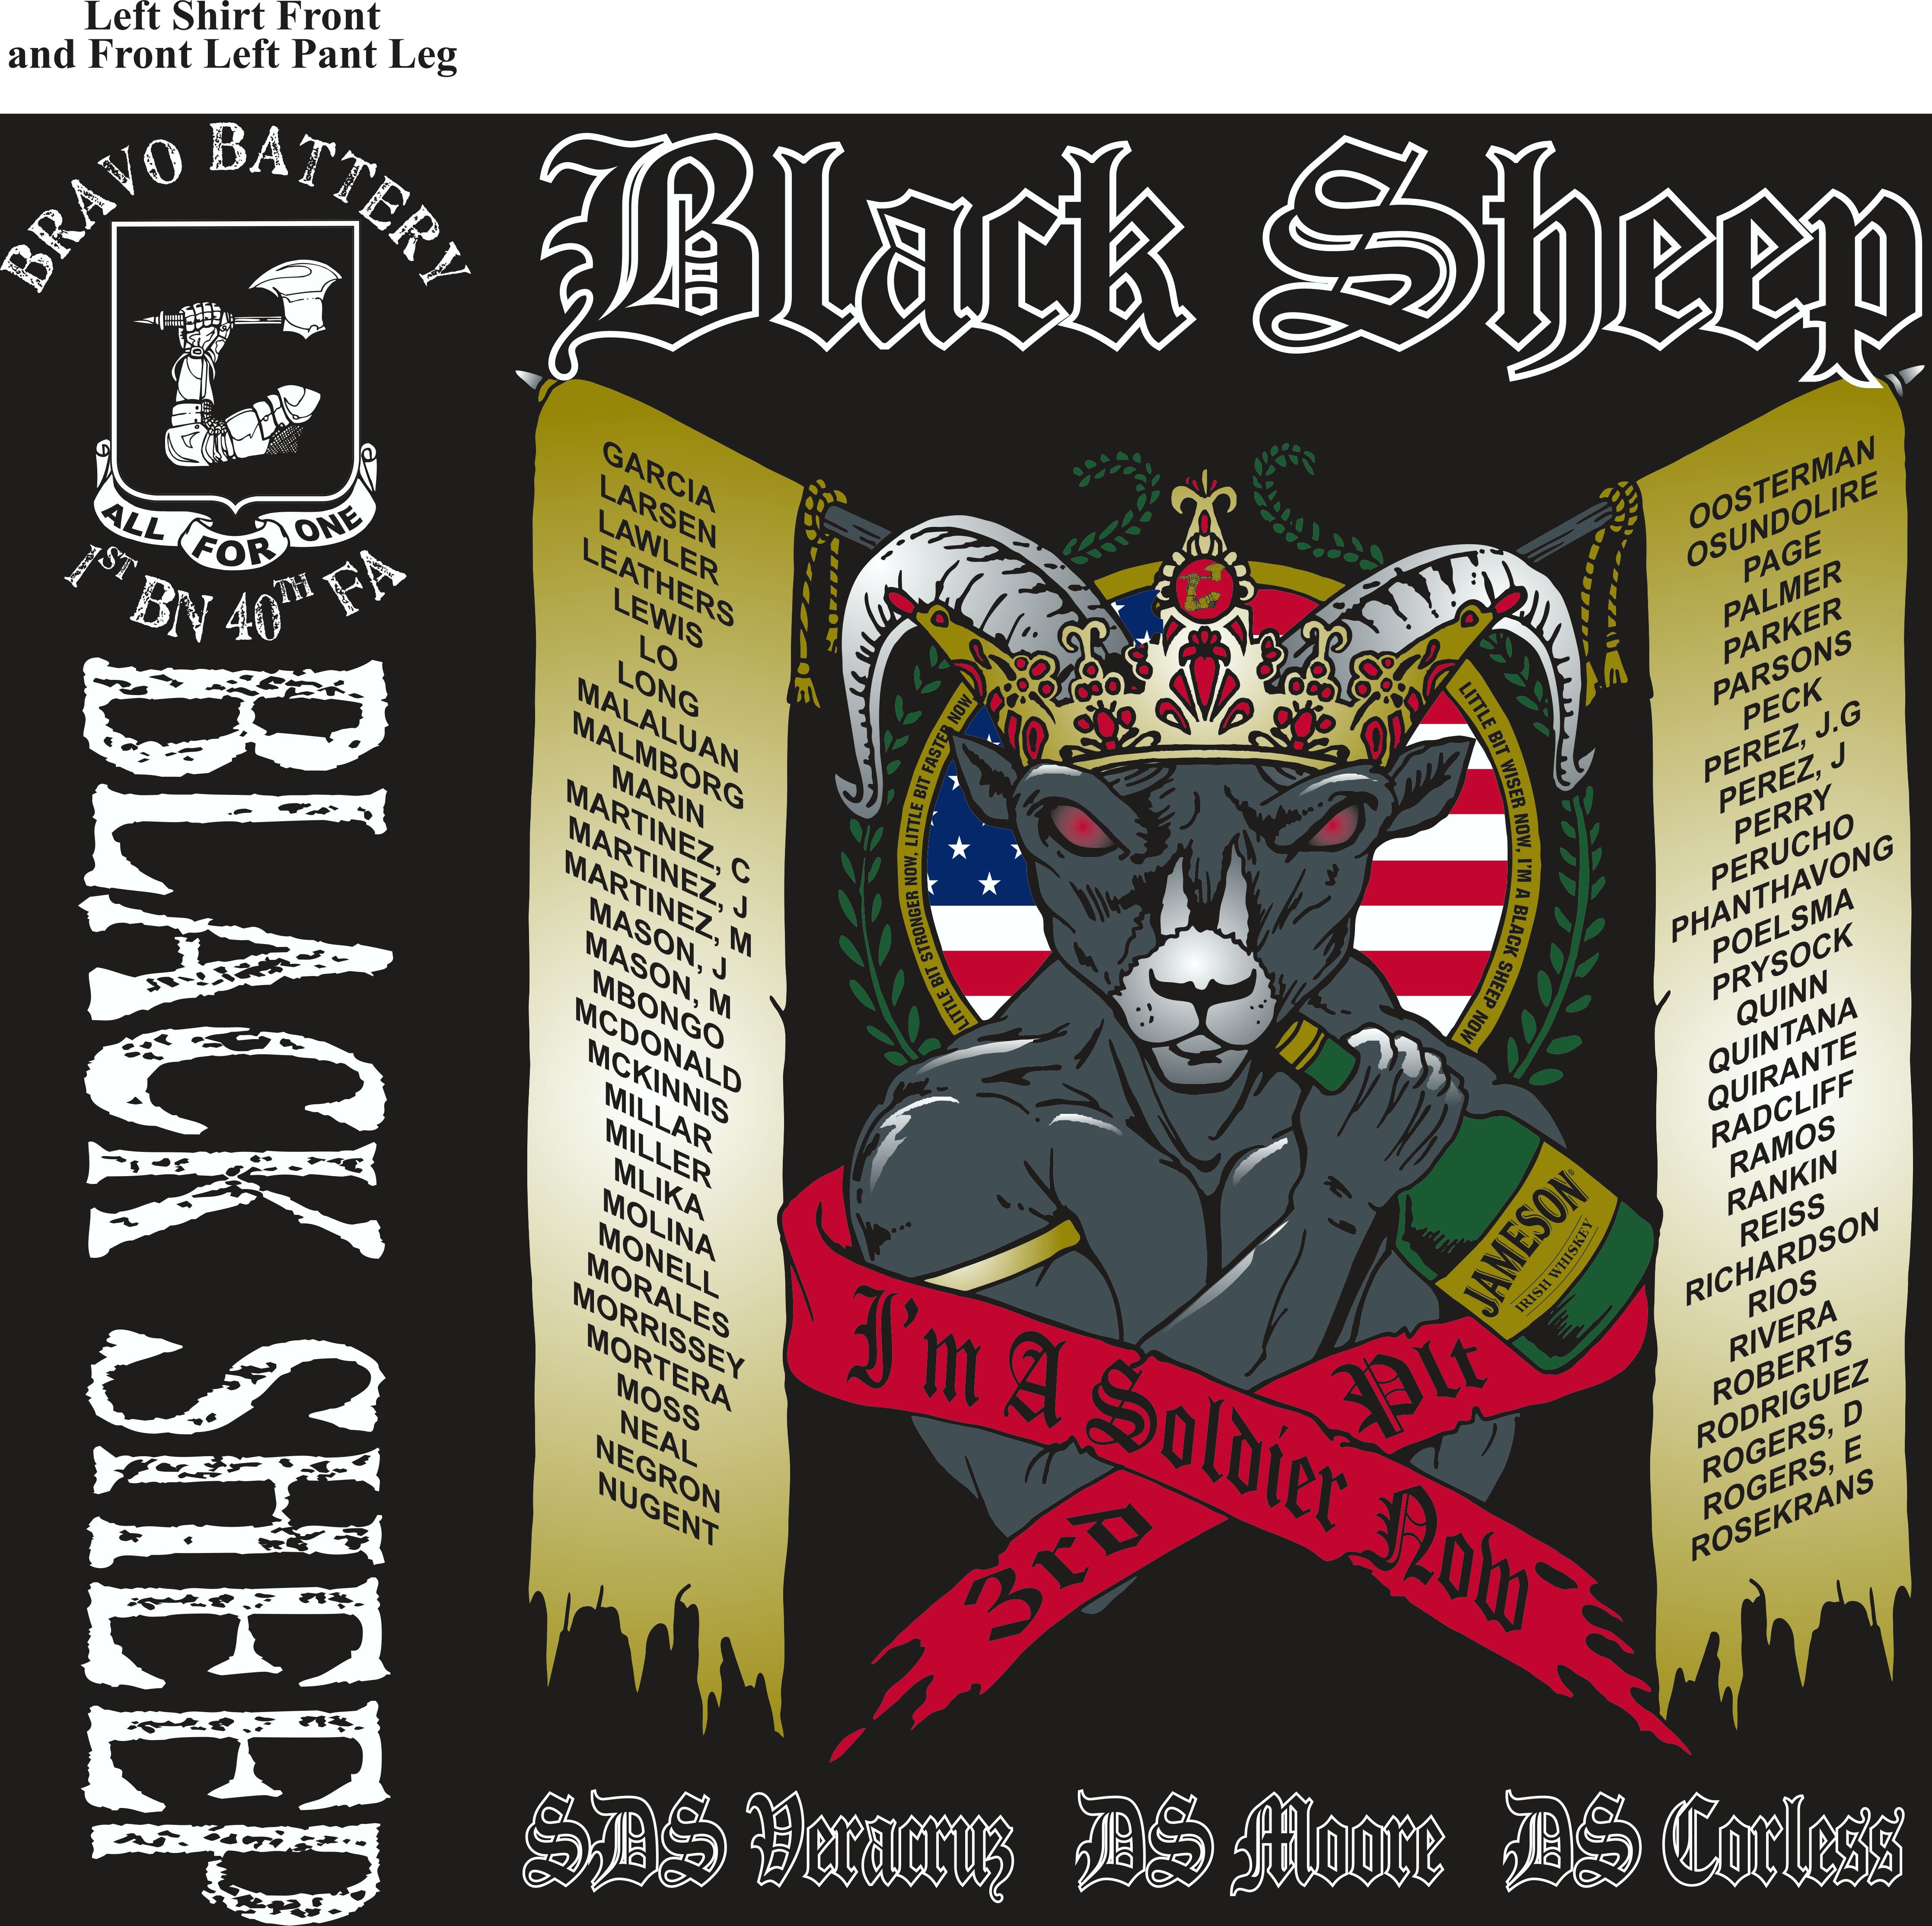 Platoon Shirts (2nd generation print) BRAVO 1ST 40TH BLACK SHEEP OCT 2017